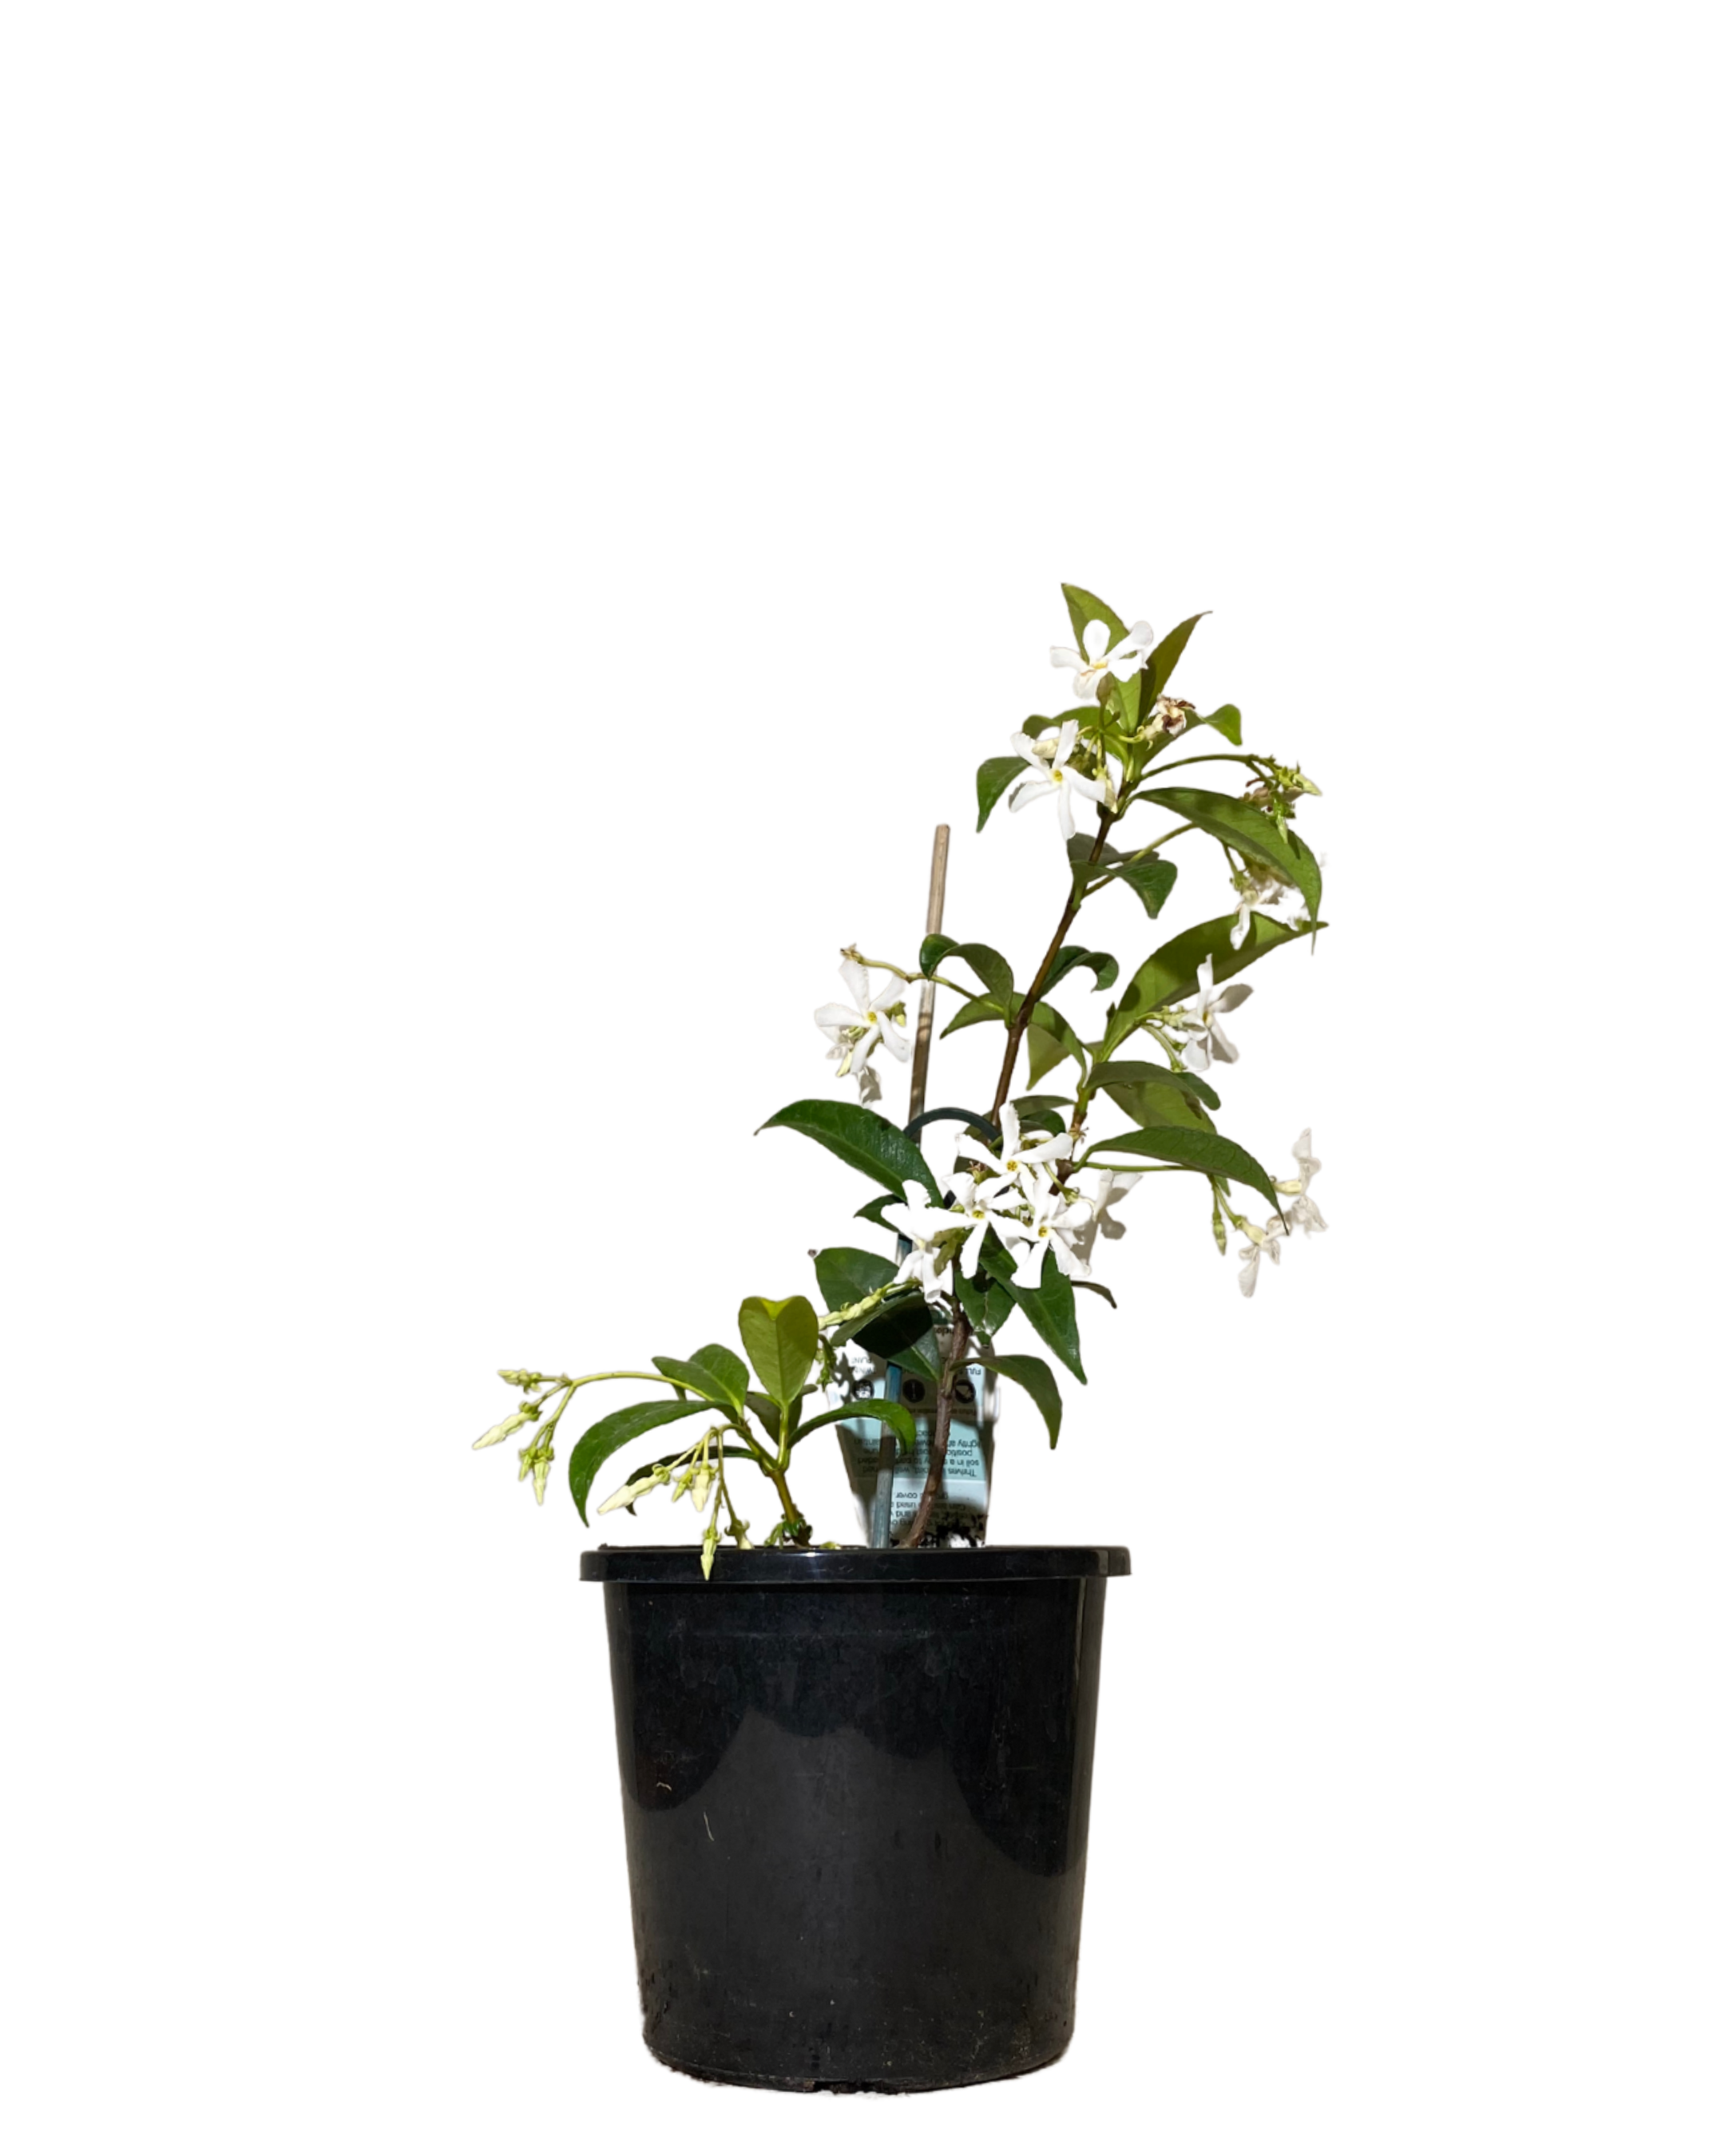 Star Jasmine - Trachelospermum Jasminoides